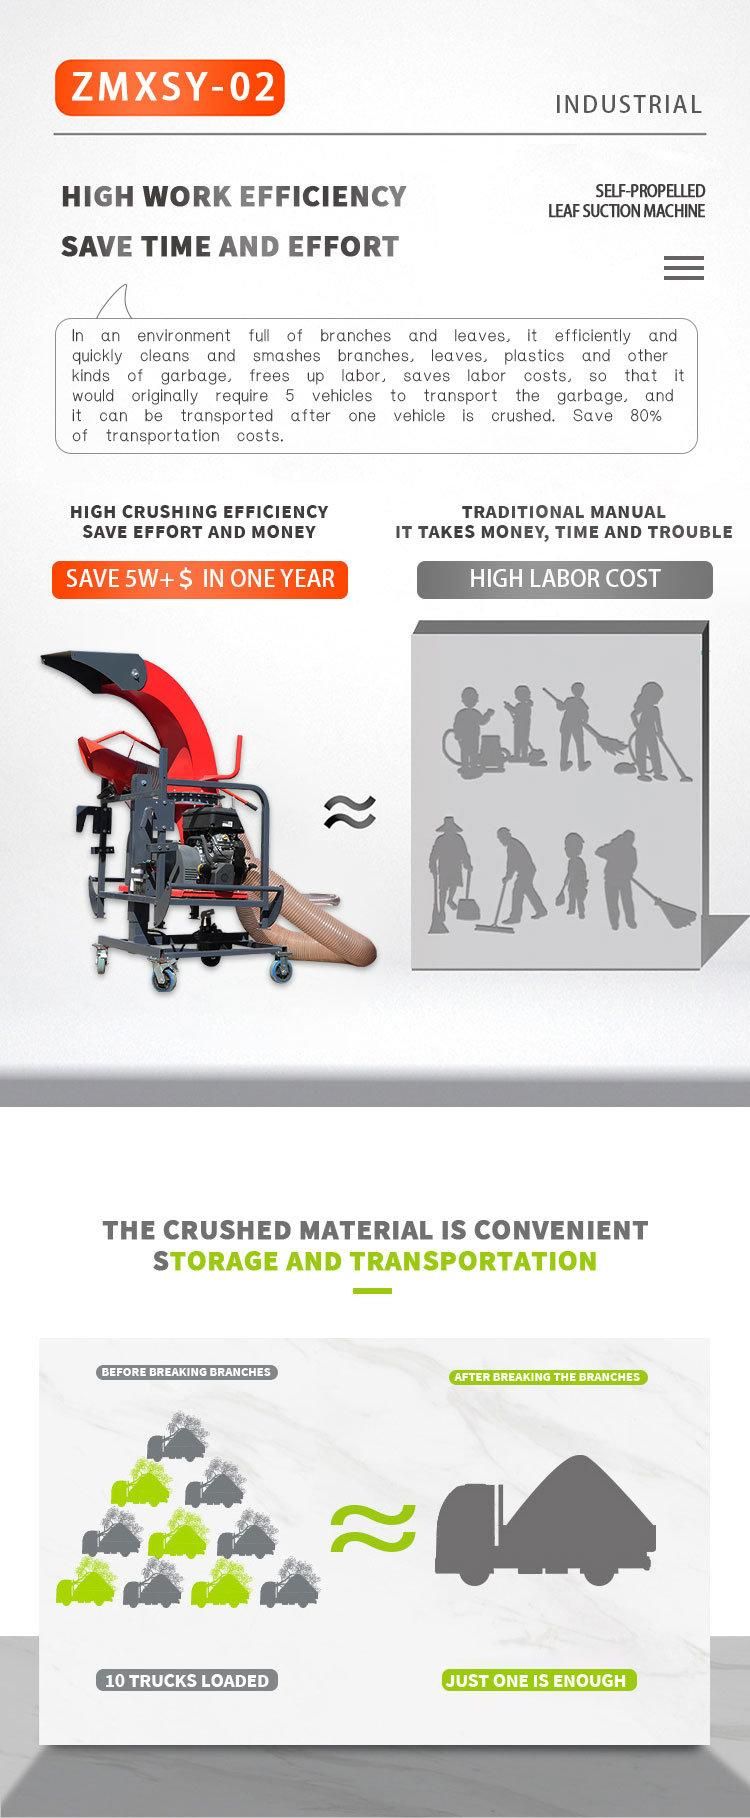 Source Manufacturers Quality Assurance Vacuum Shredder Power Blade Vacuum Shredder Best Leaf Cover